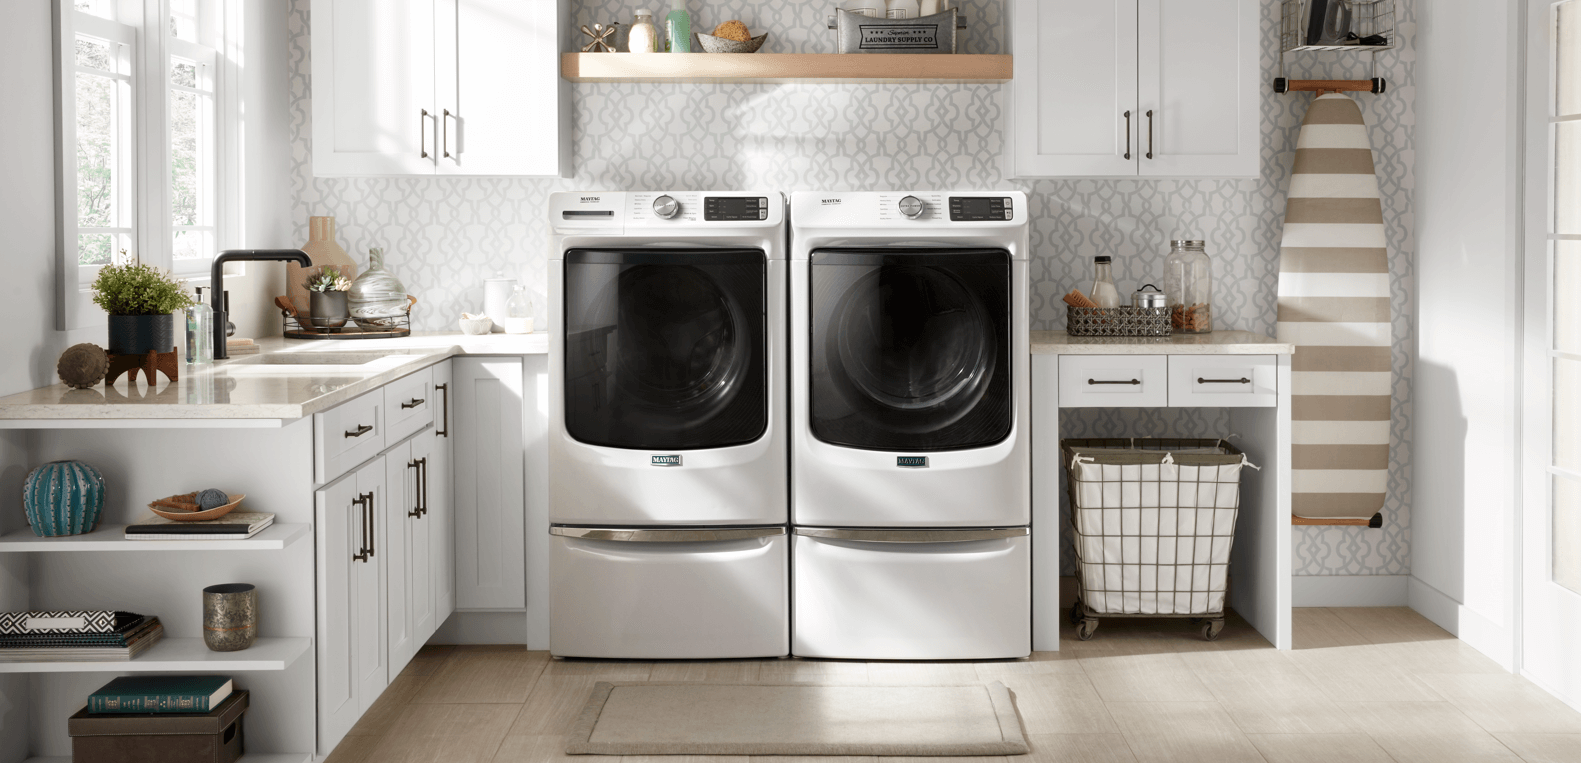 Teacher Discount on Maytag Appliances | Education Discount on Kitchen & Laundry Appliances from Maytag